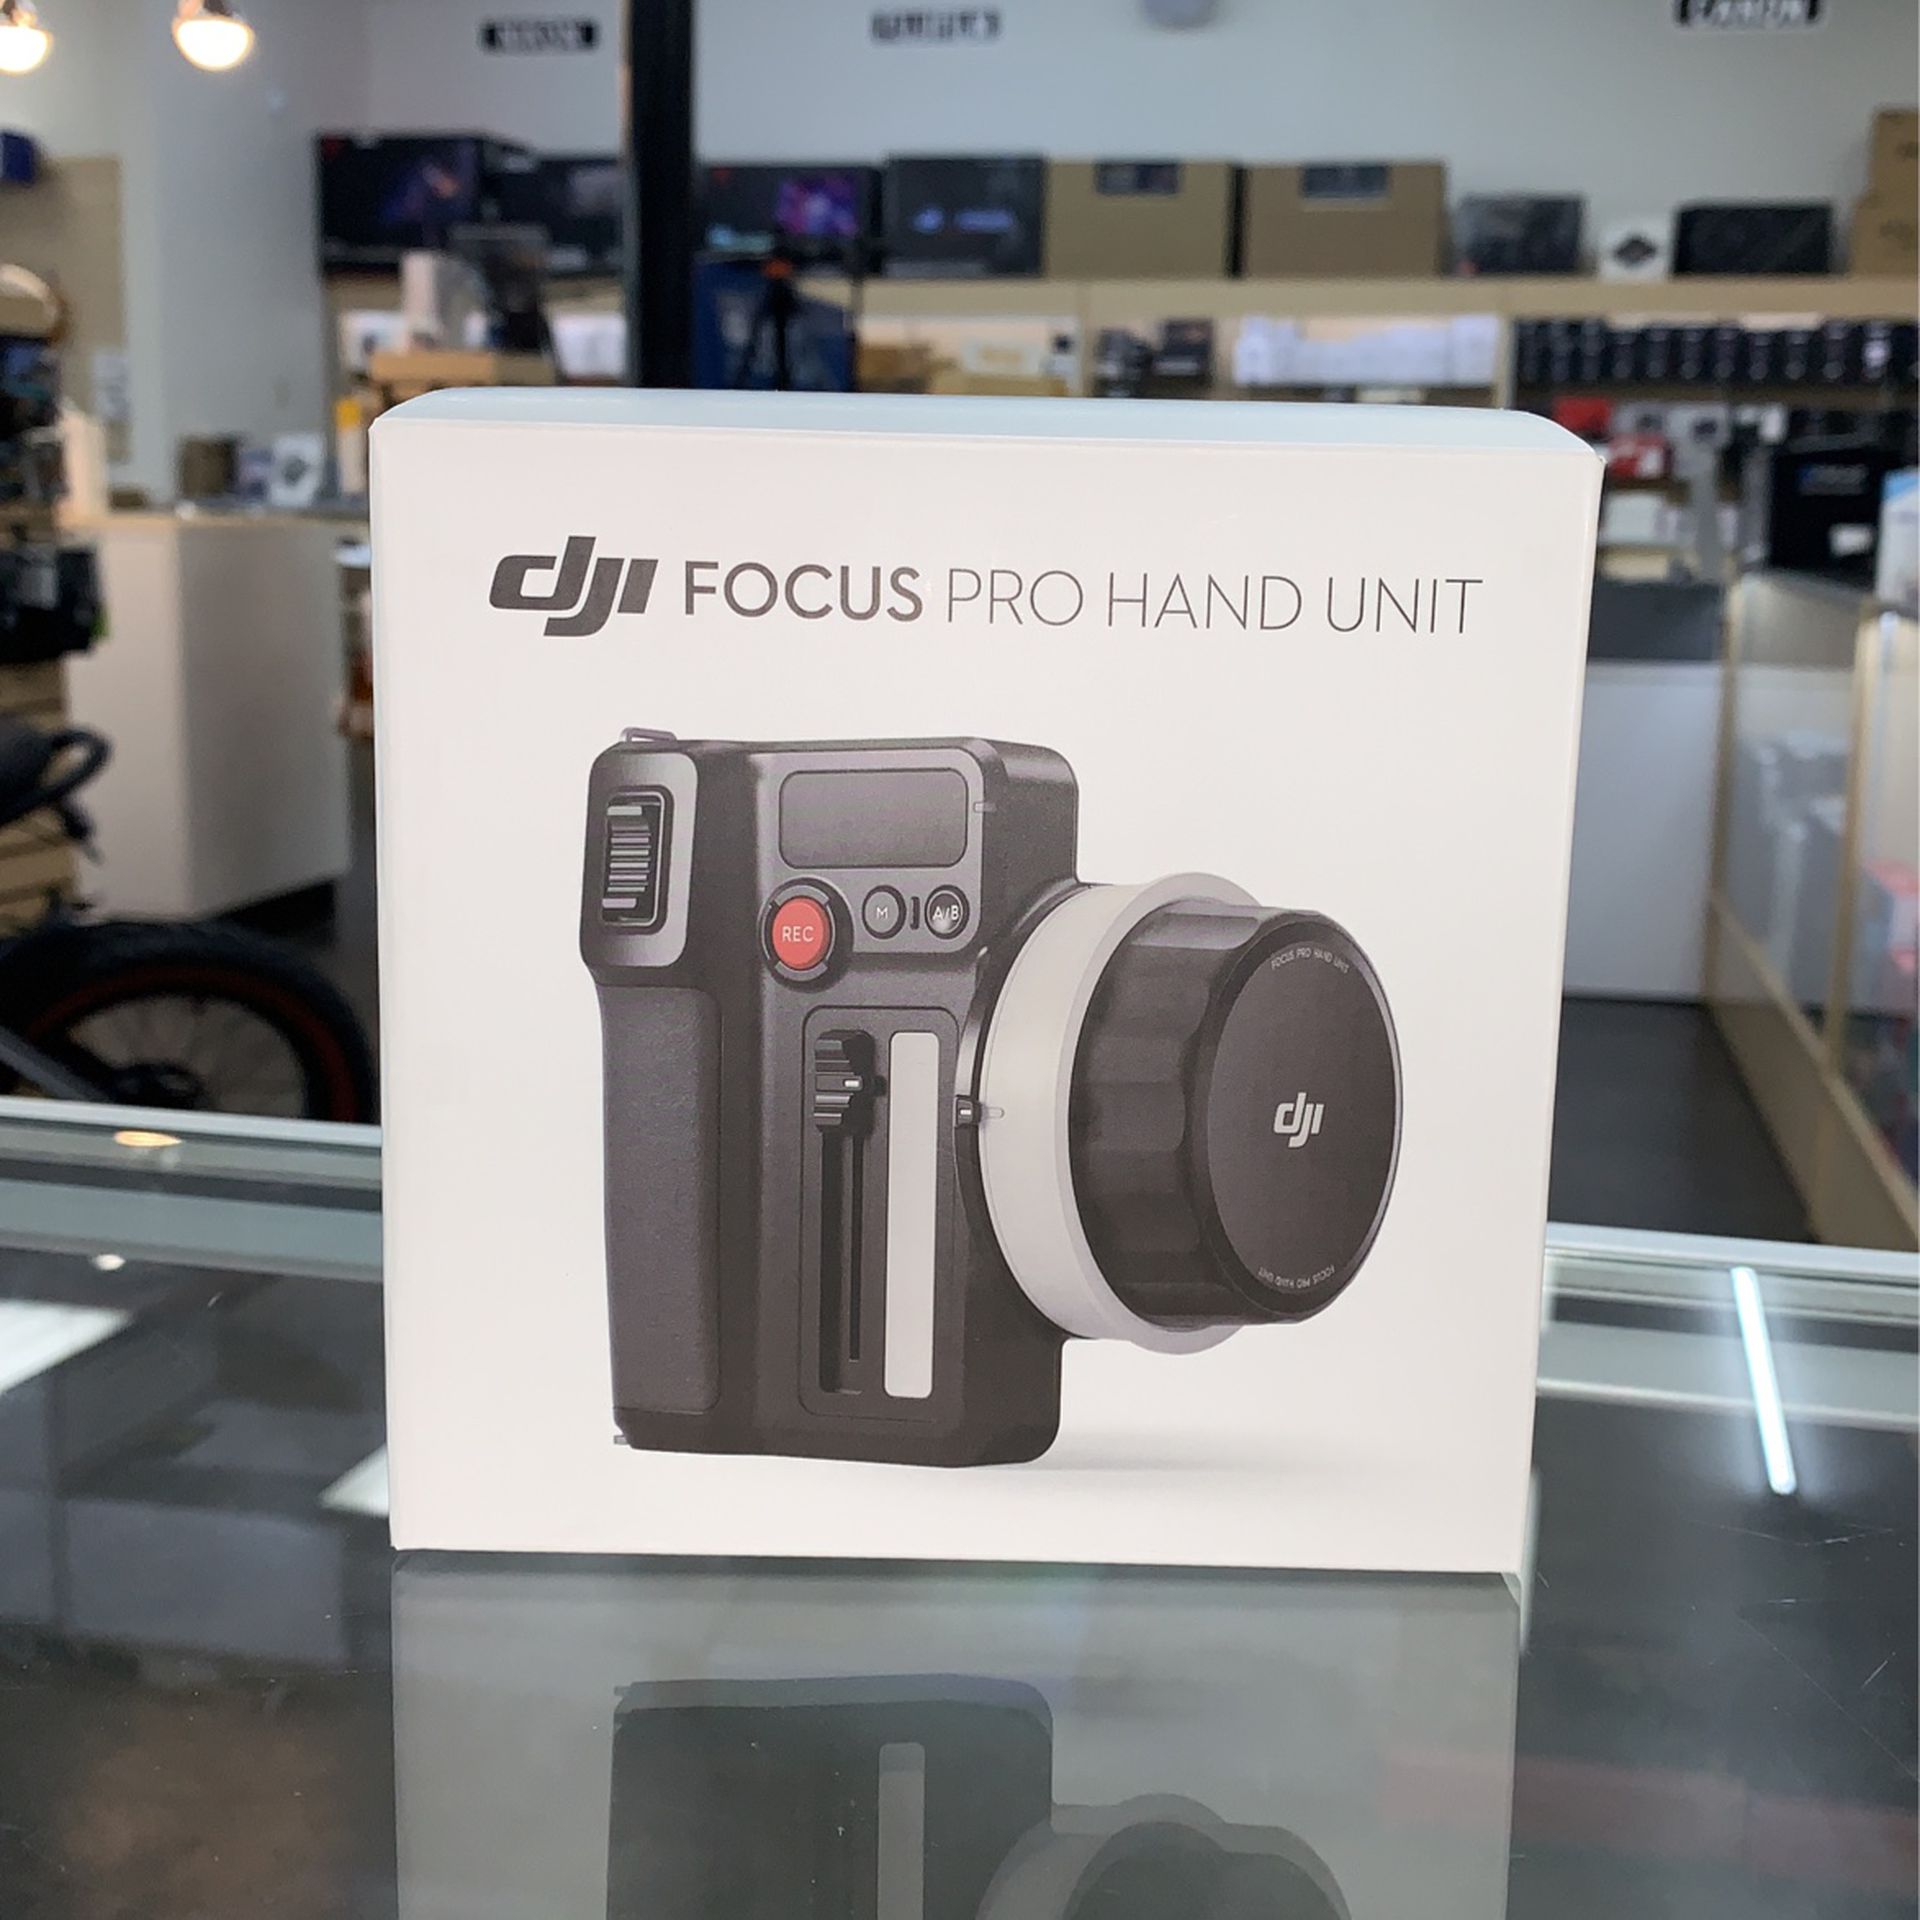 DJI Focus Motor Pro Hand Unit.